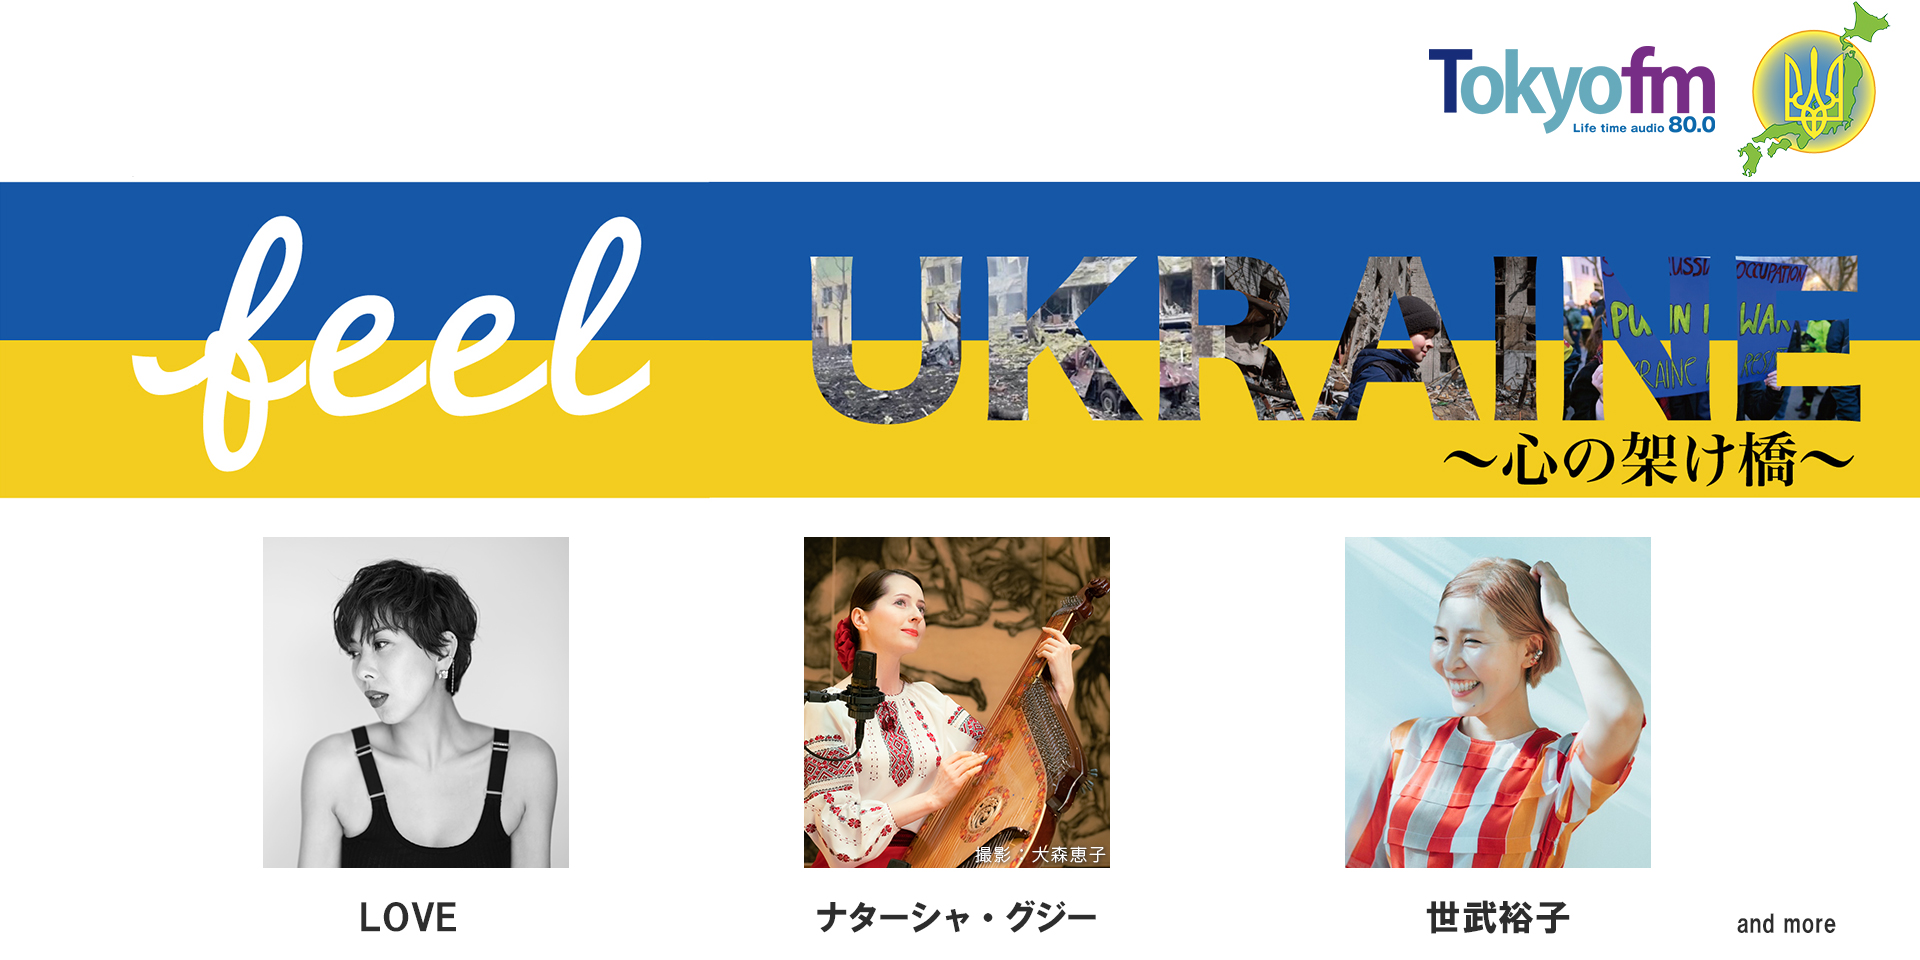 TOKYO FM 『FEEL UKRAINE～心の架け橋～』 - TOKYO FM Information